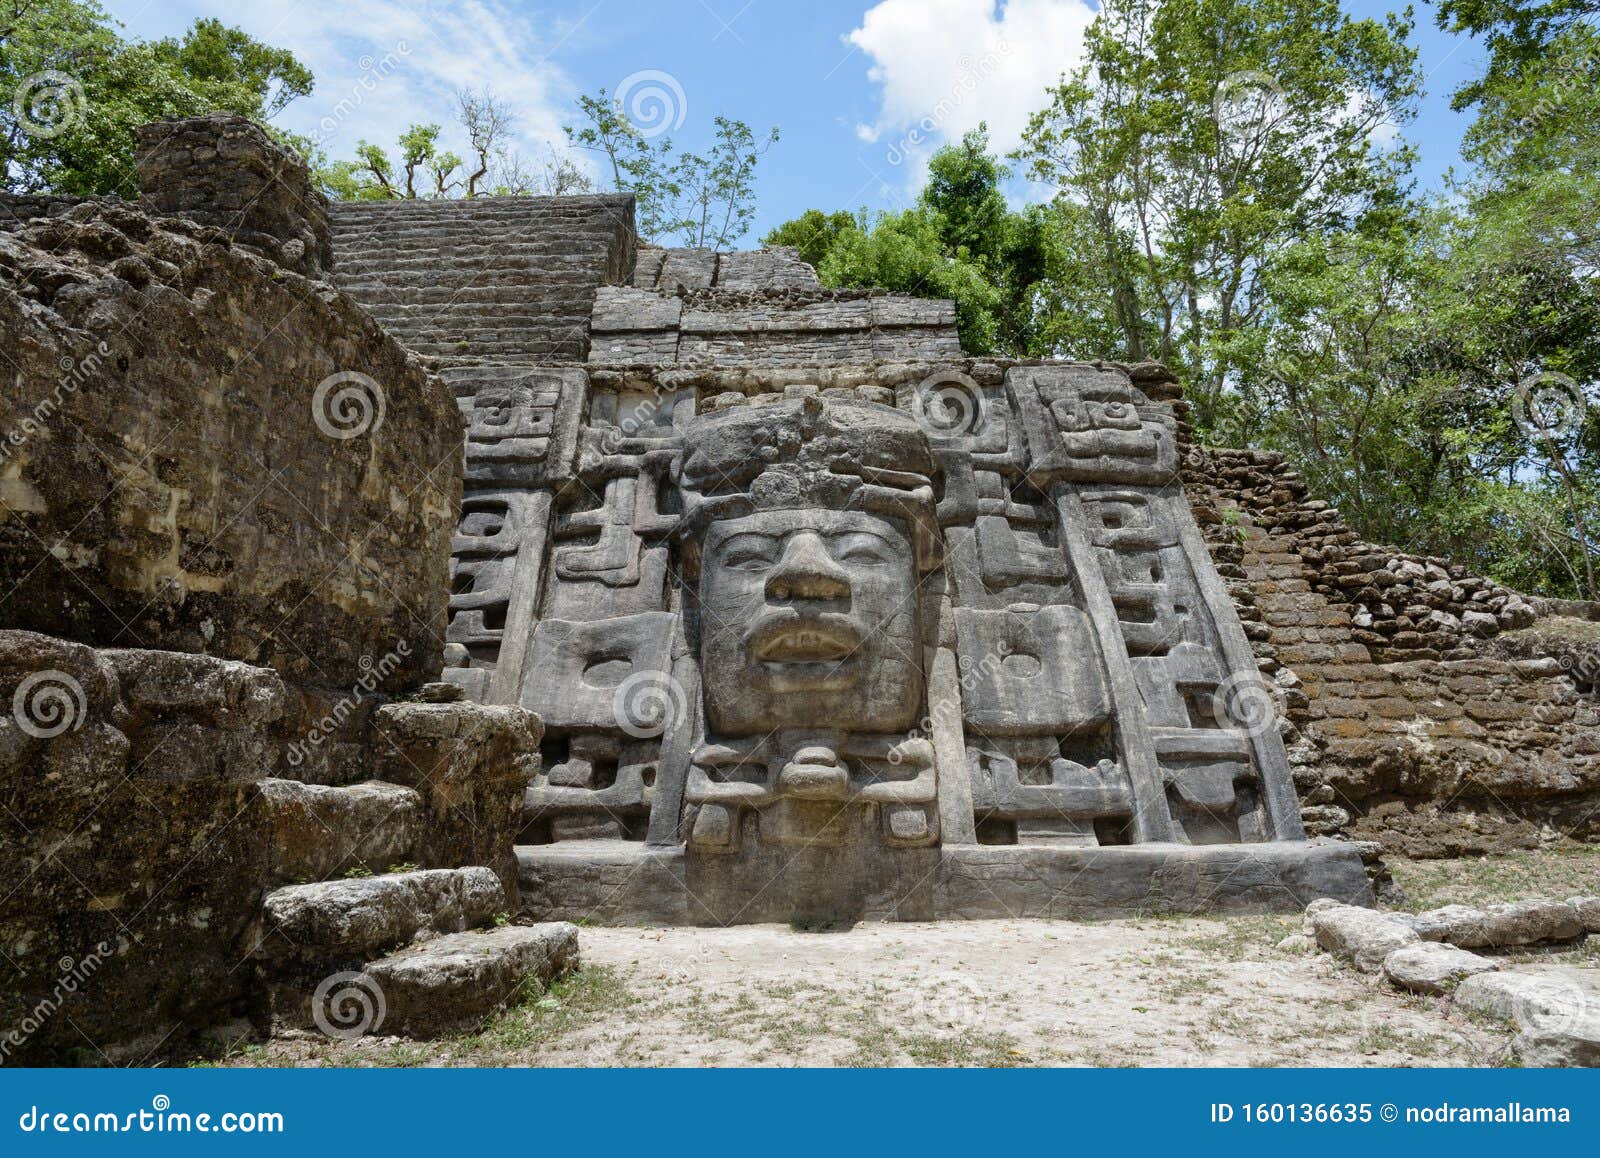 temple-pyramid-masks-lamanai-archaeological-reserve-orange-walk-belize-central-america-temple-pyramid-masks-lamanai-160136635.jpg